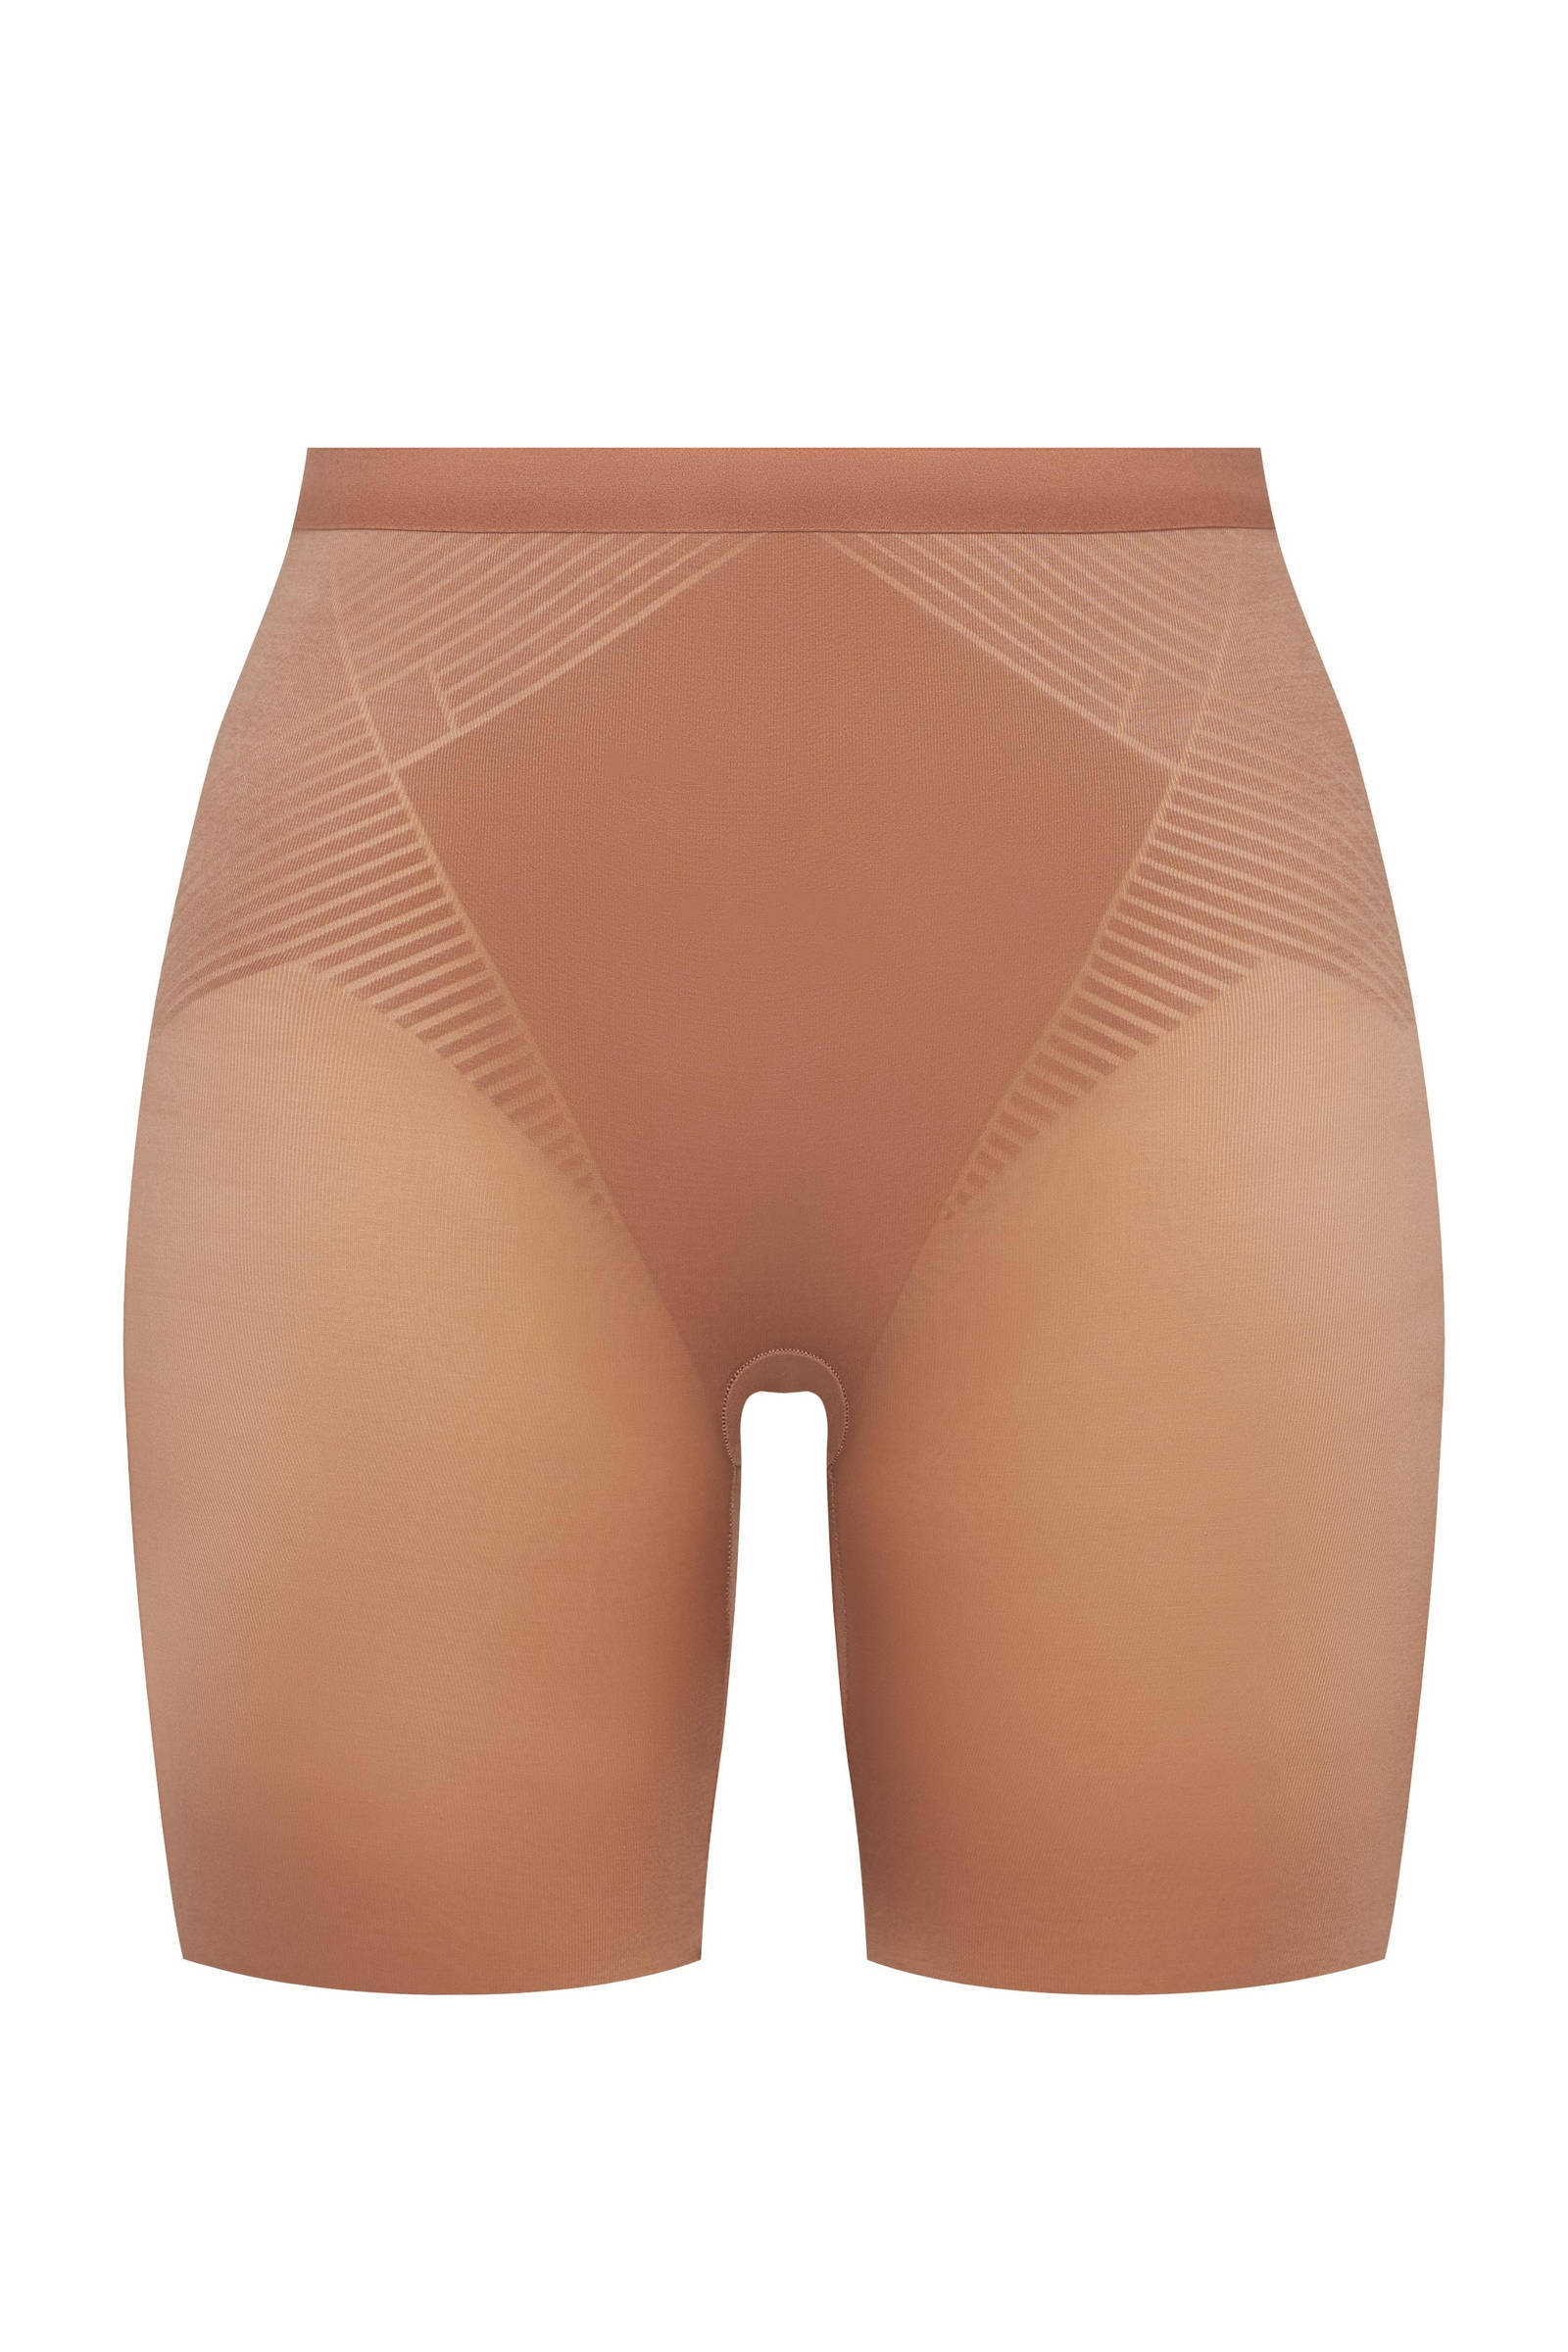 wehkamp Dames Kleding Lingerie & Ondermode Shapewear Medium corrigerende short Thinstincts 2.0 bruin 